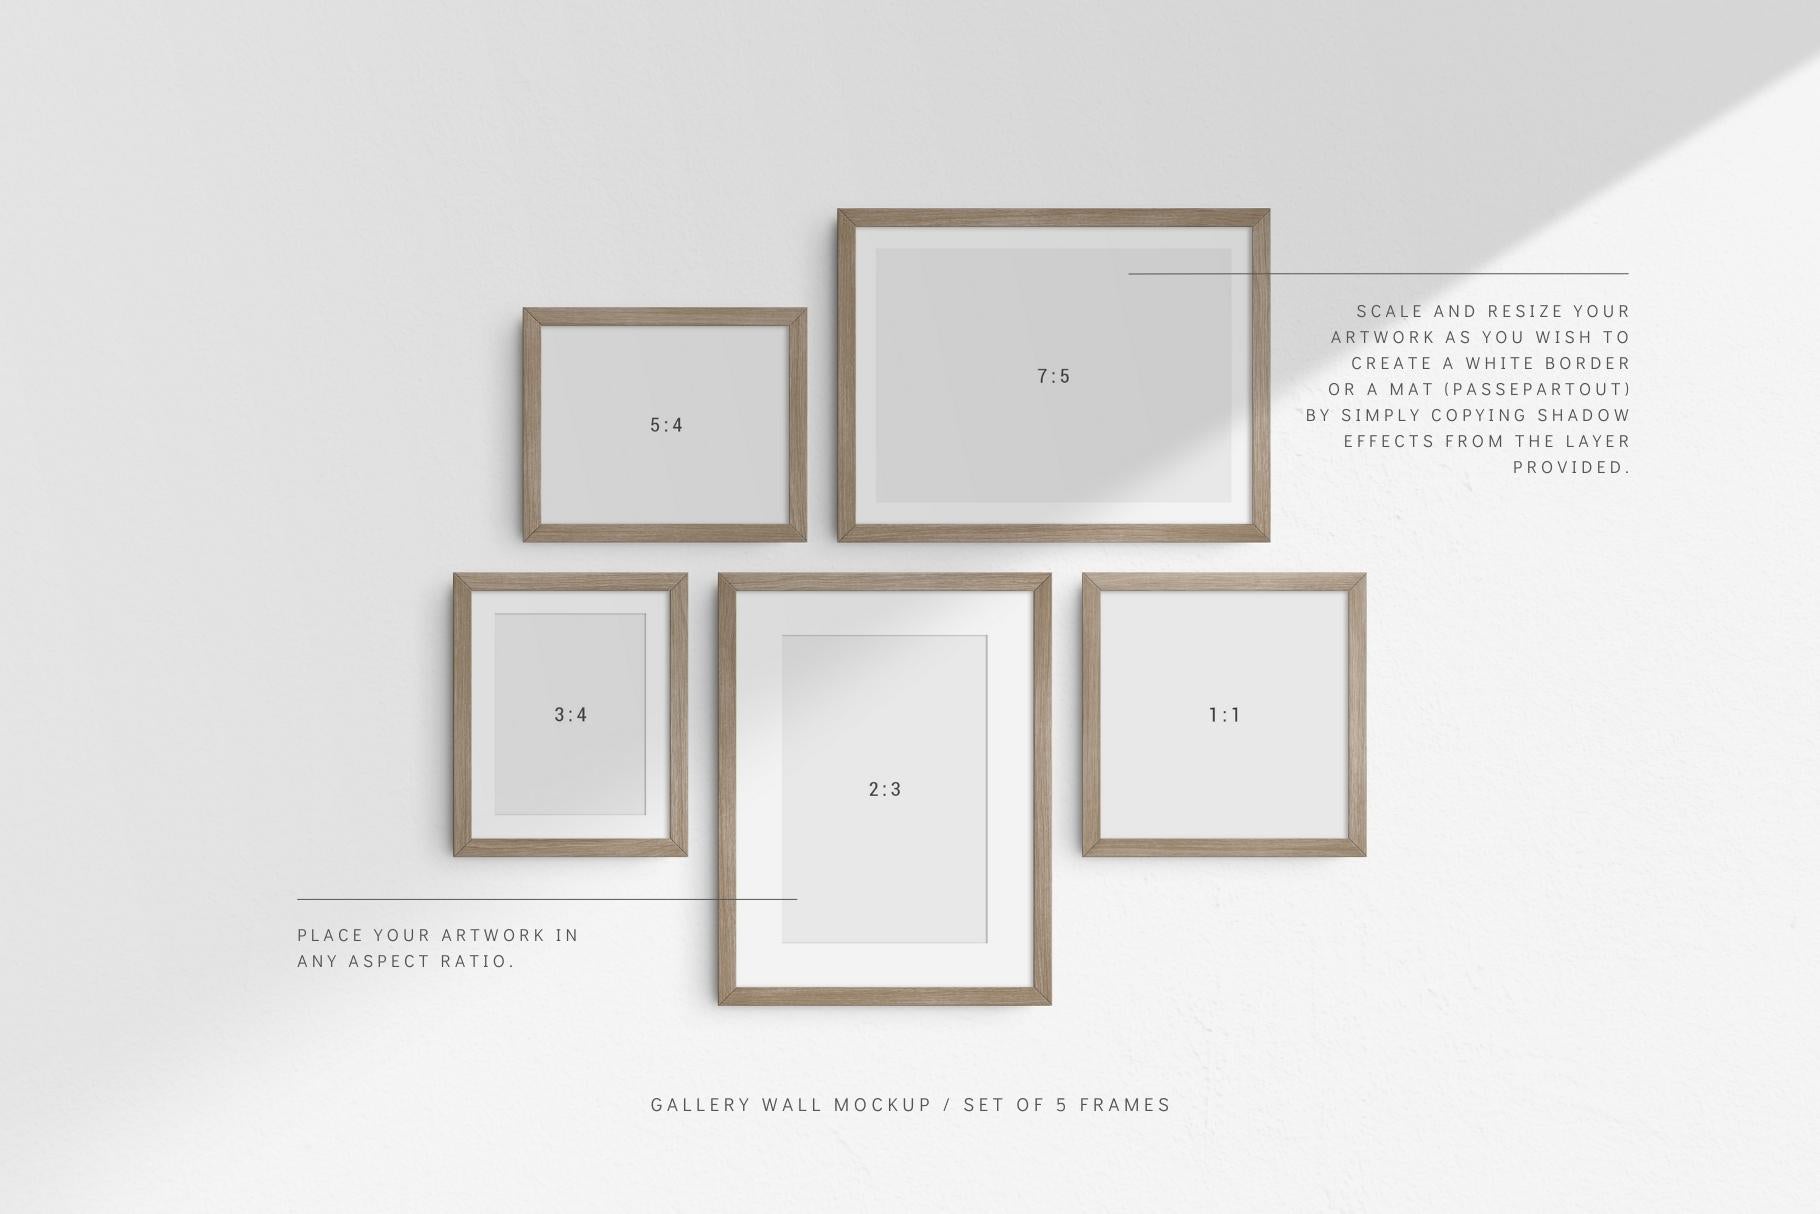 Gallery Wall Mockup | Set of 5 Frames | Frame Mockup | PSD | Mat Passepartout